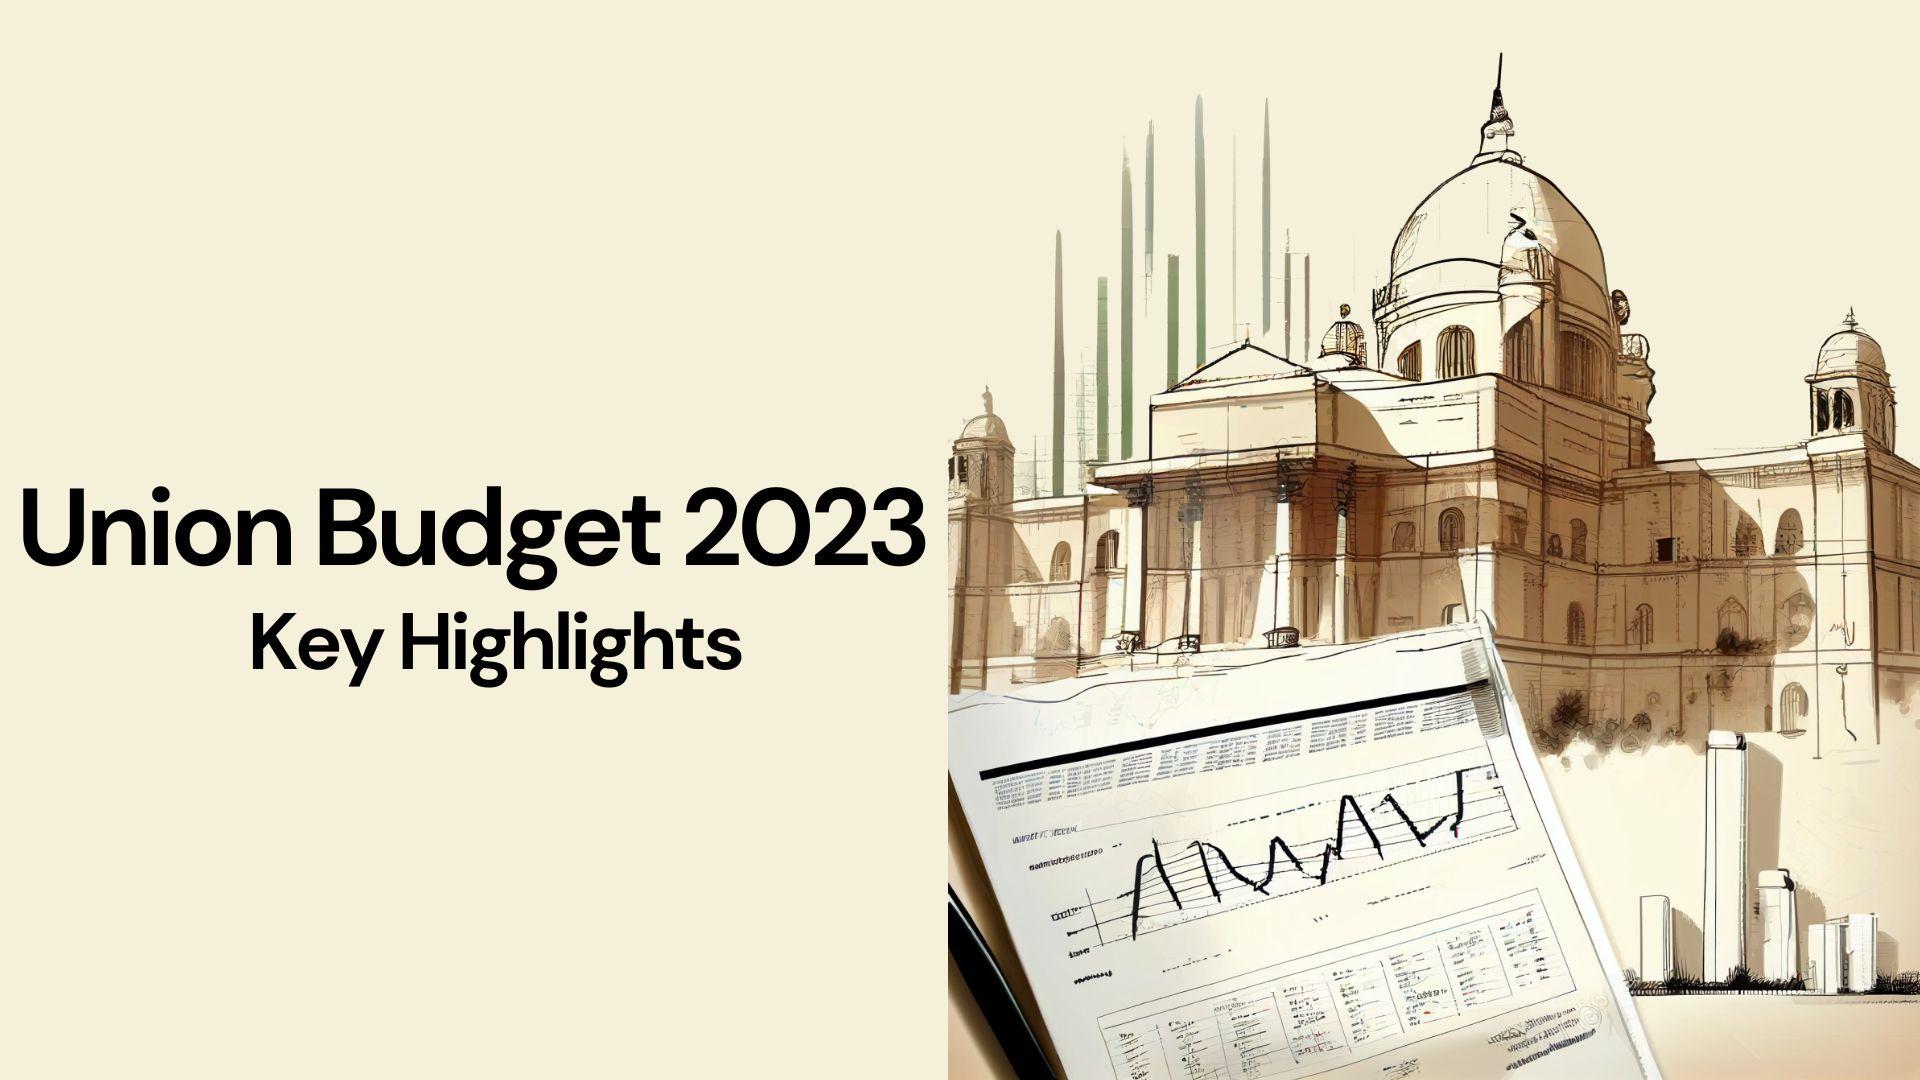 Union budget 2023 is presented by FM Nirmala Sitharaman_40.1